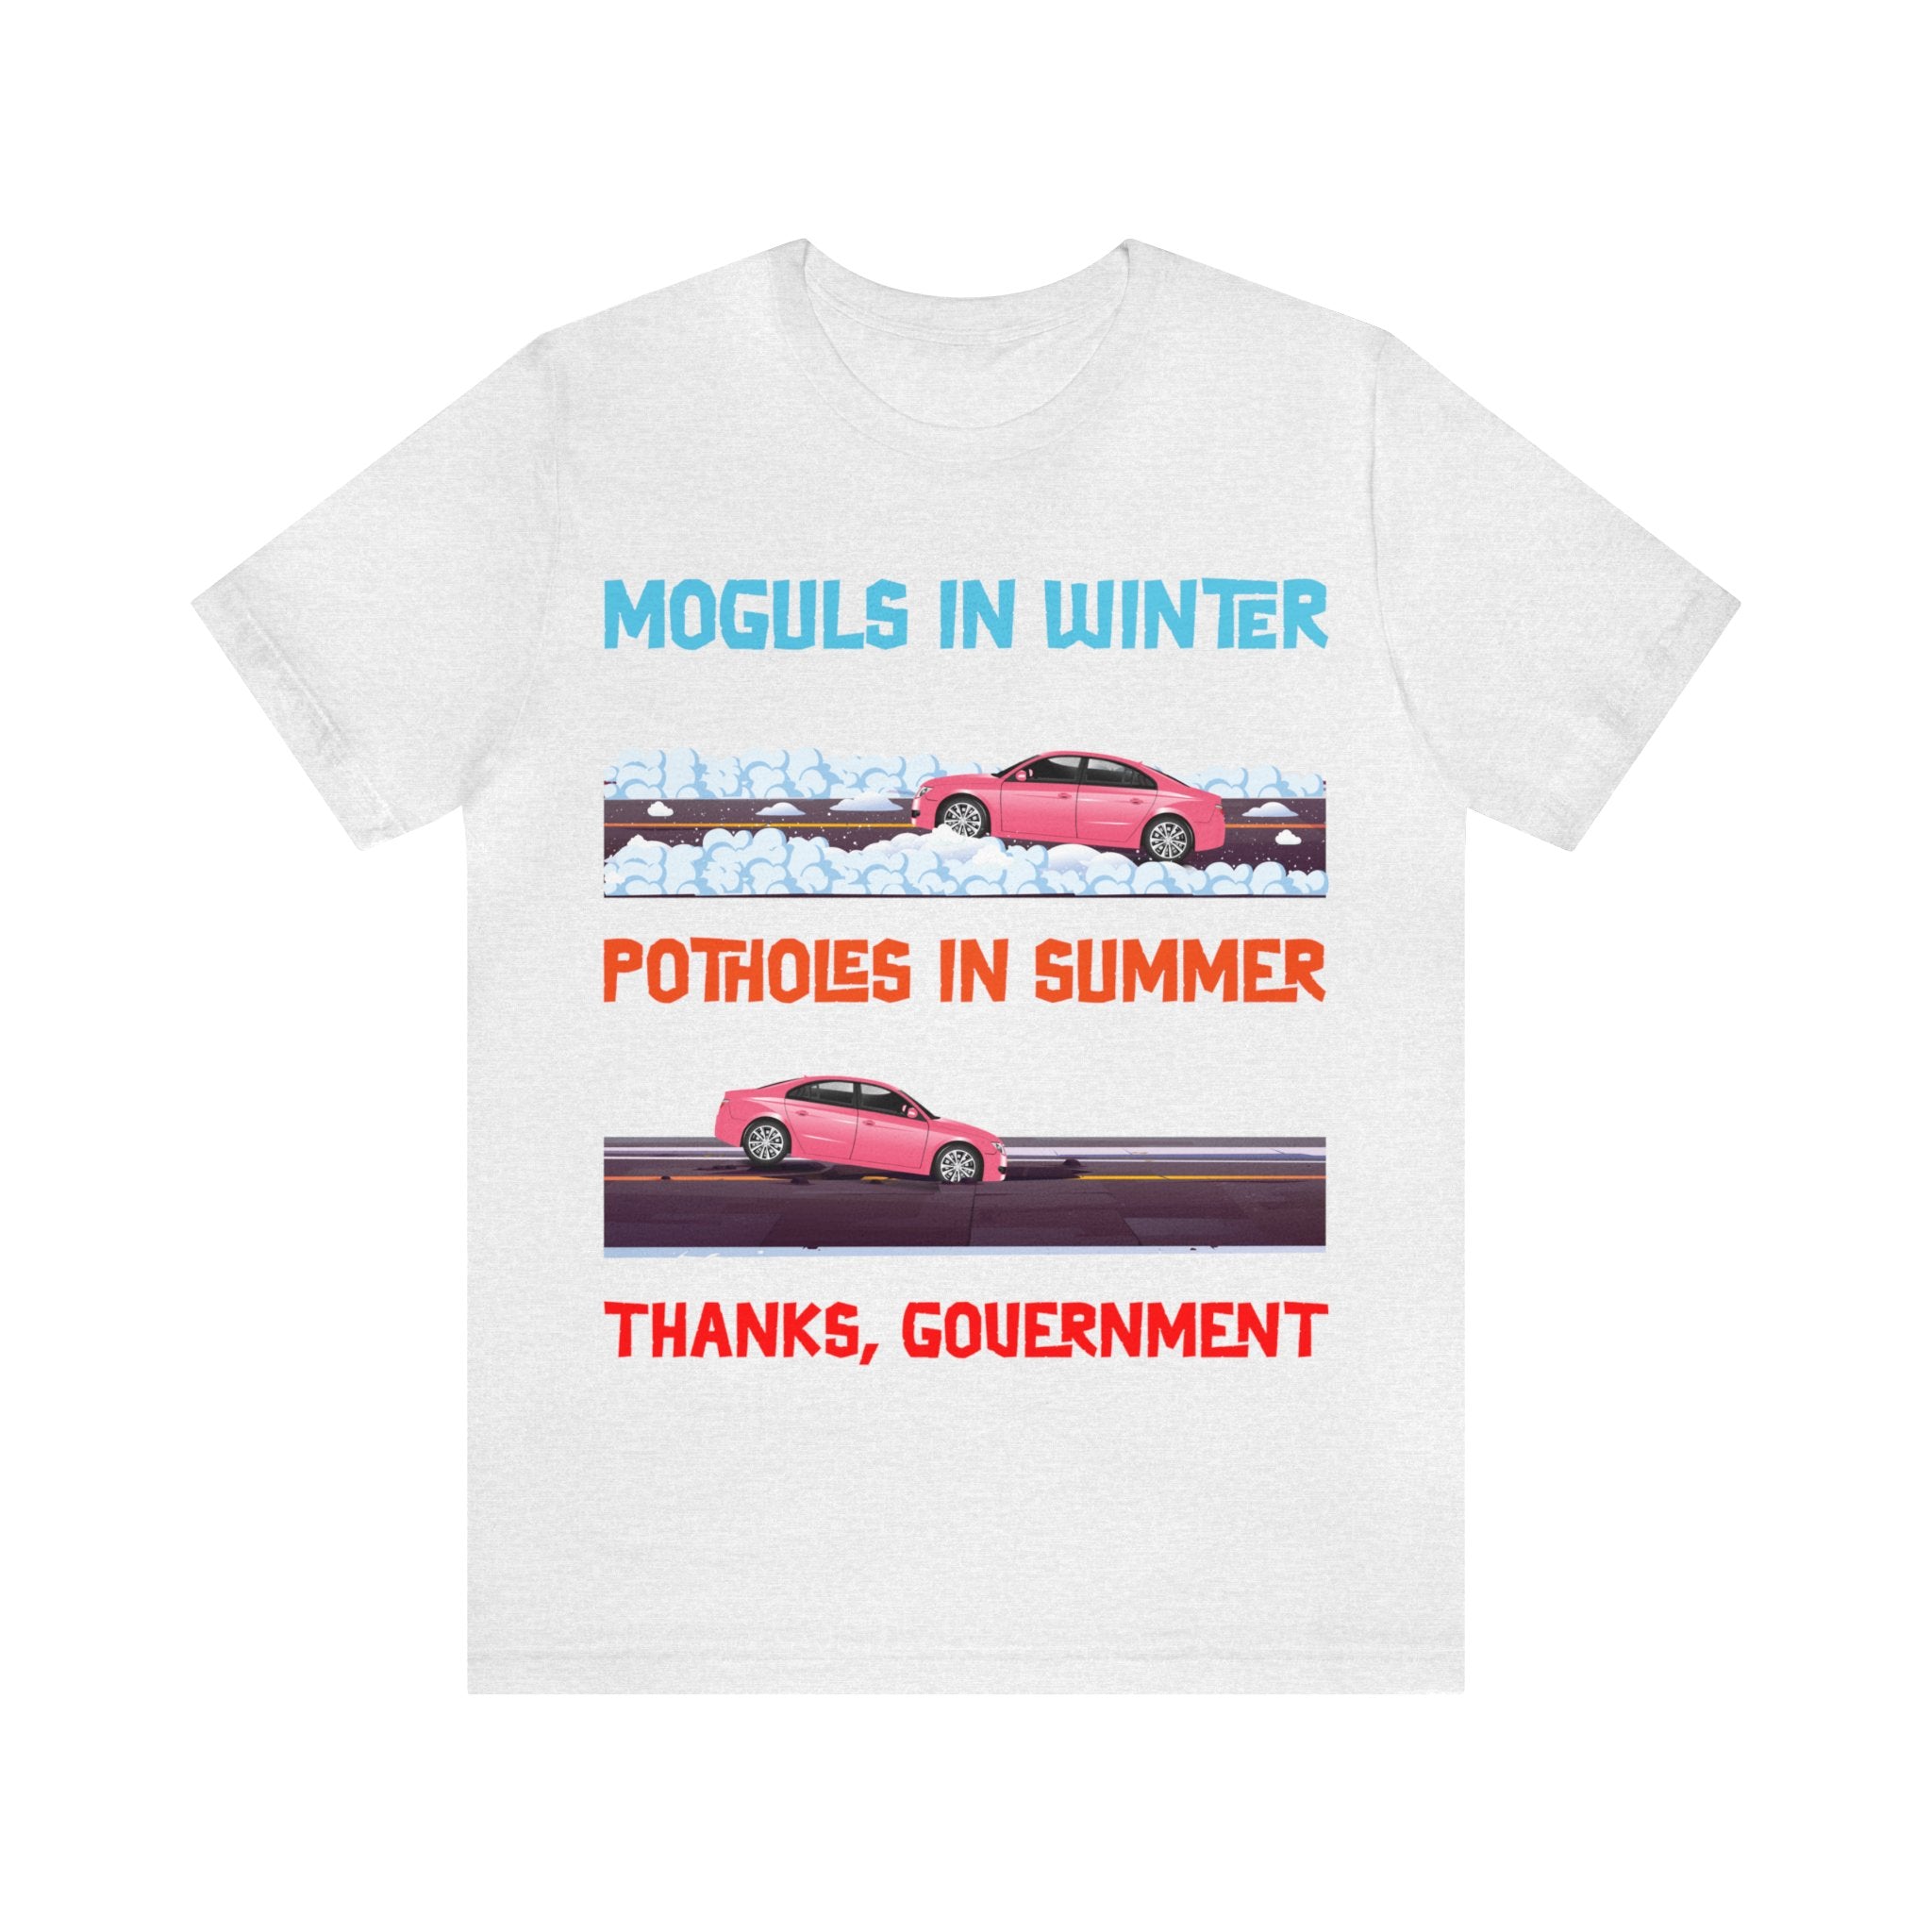 Moguls, Potholes, and Government